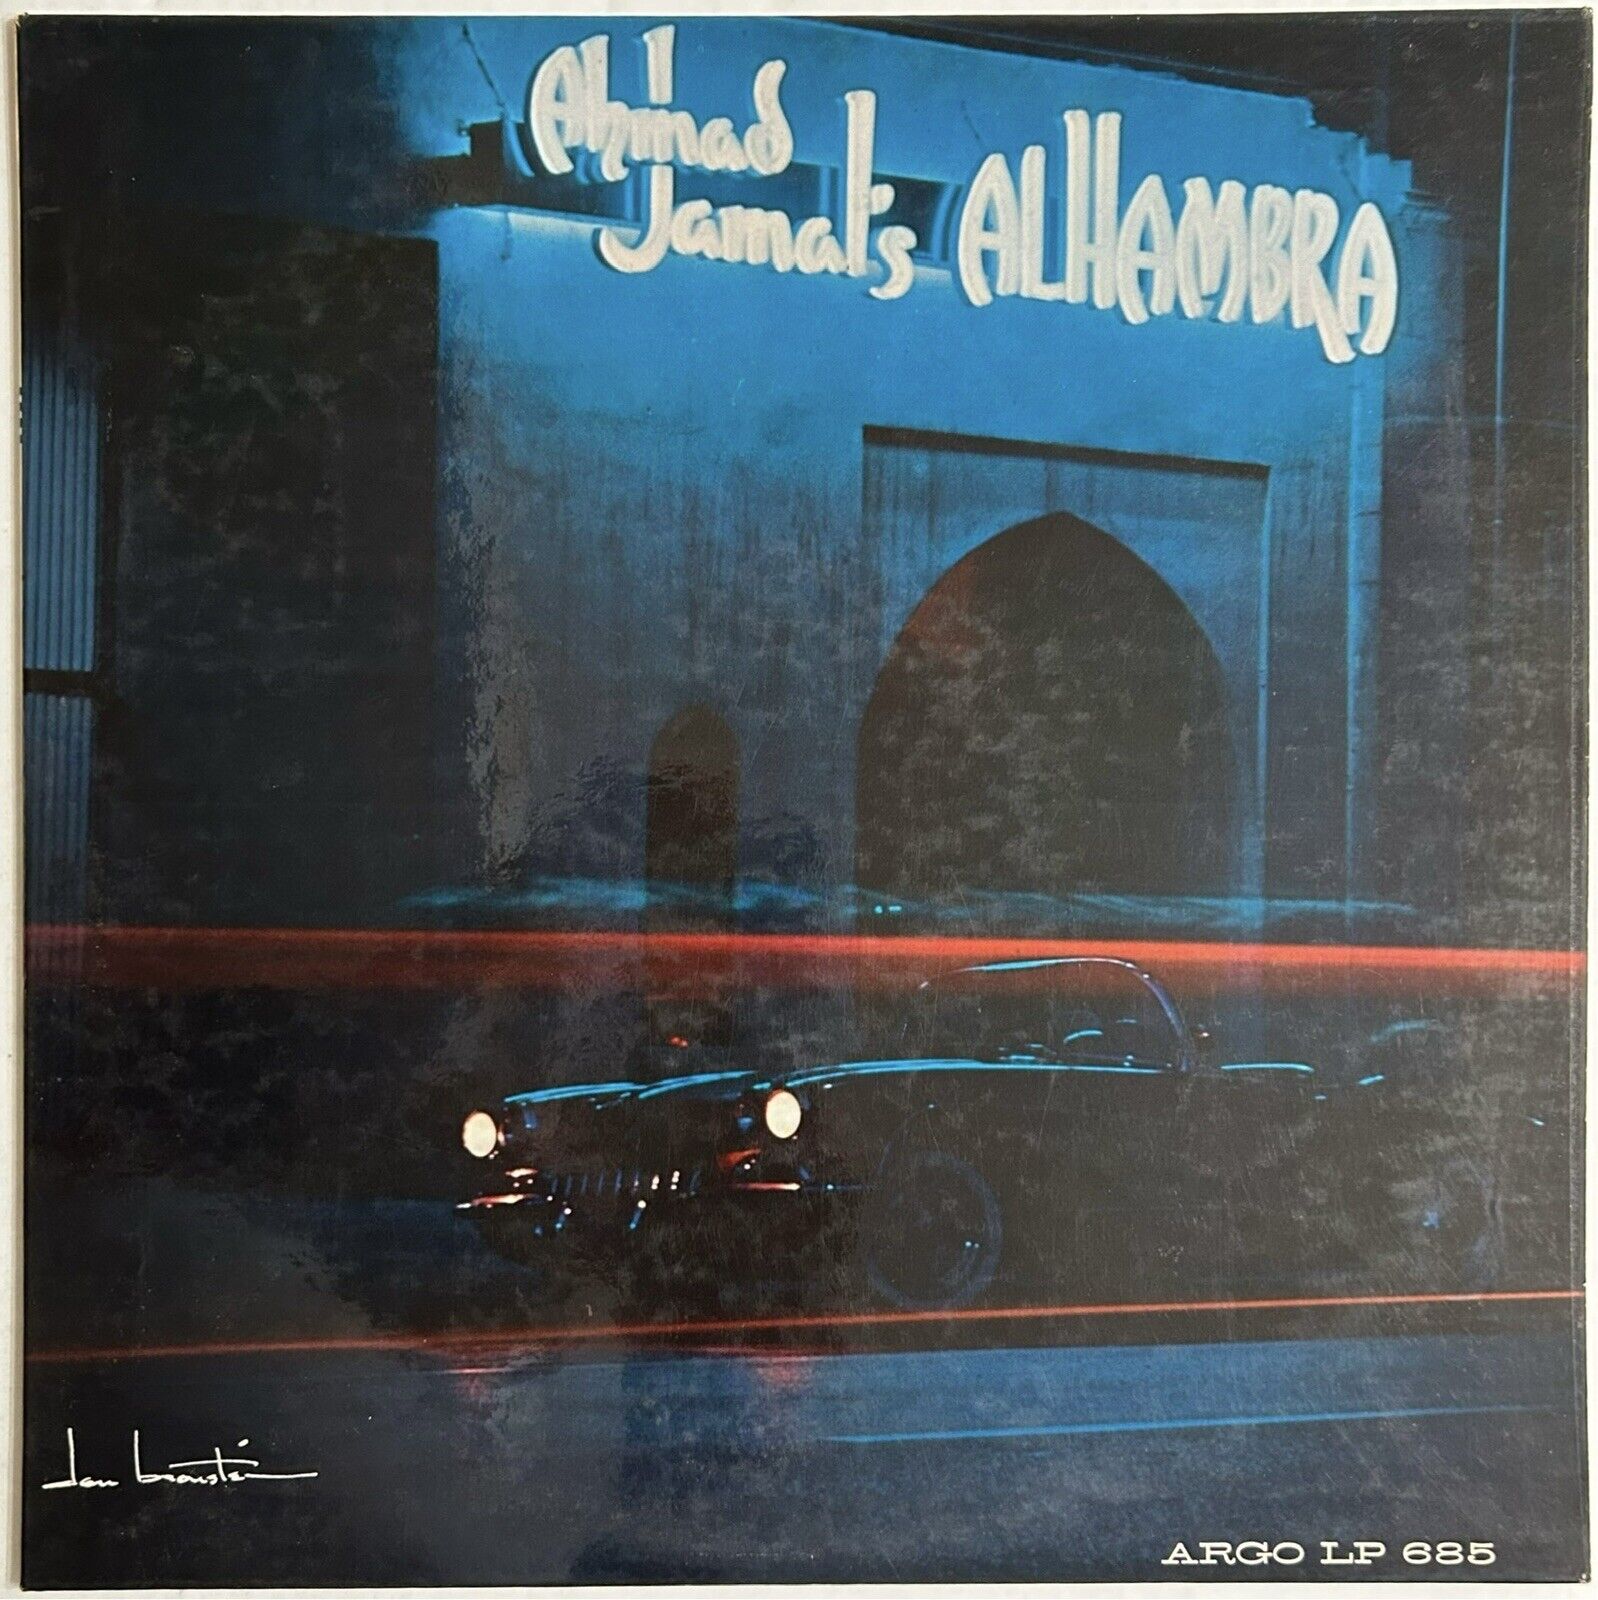 Ahmad Jamal - Alhambra - 1961 ARGO LP 685 Mono - Vinyl Gray Label w/ Inner